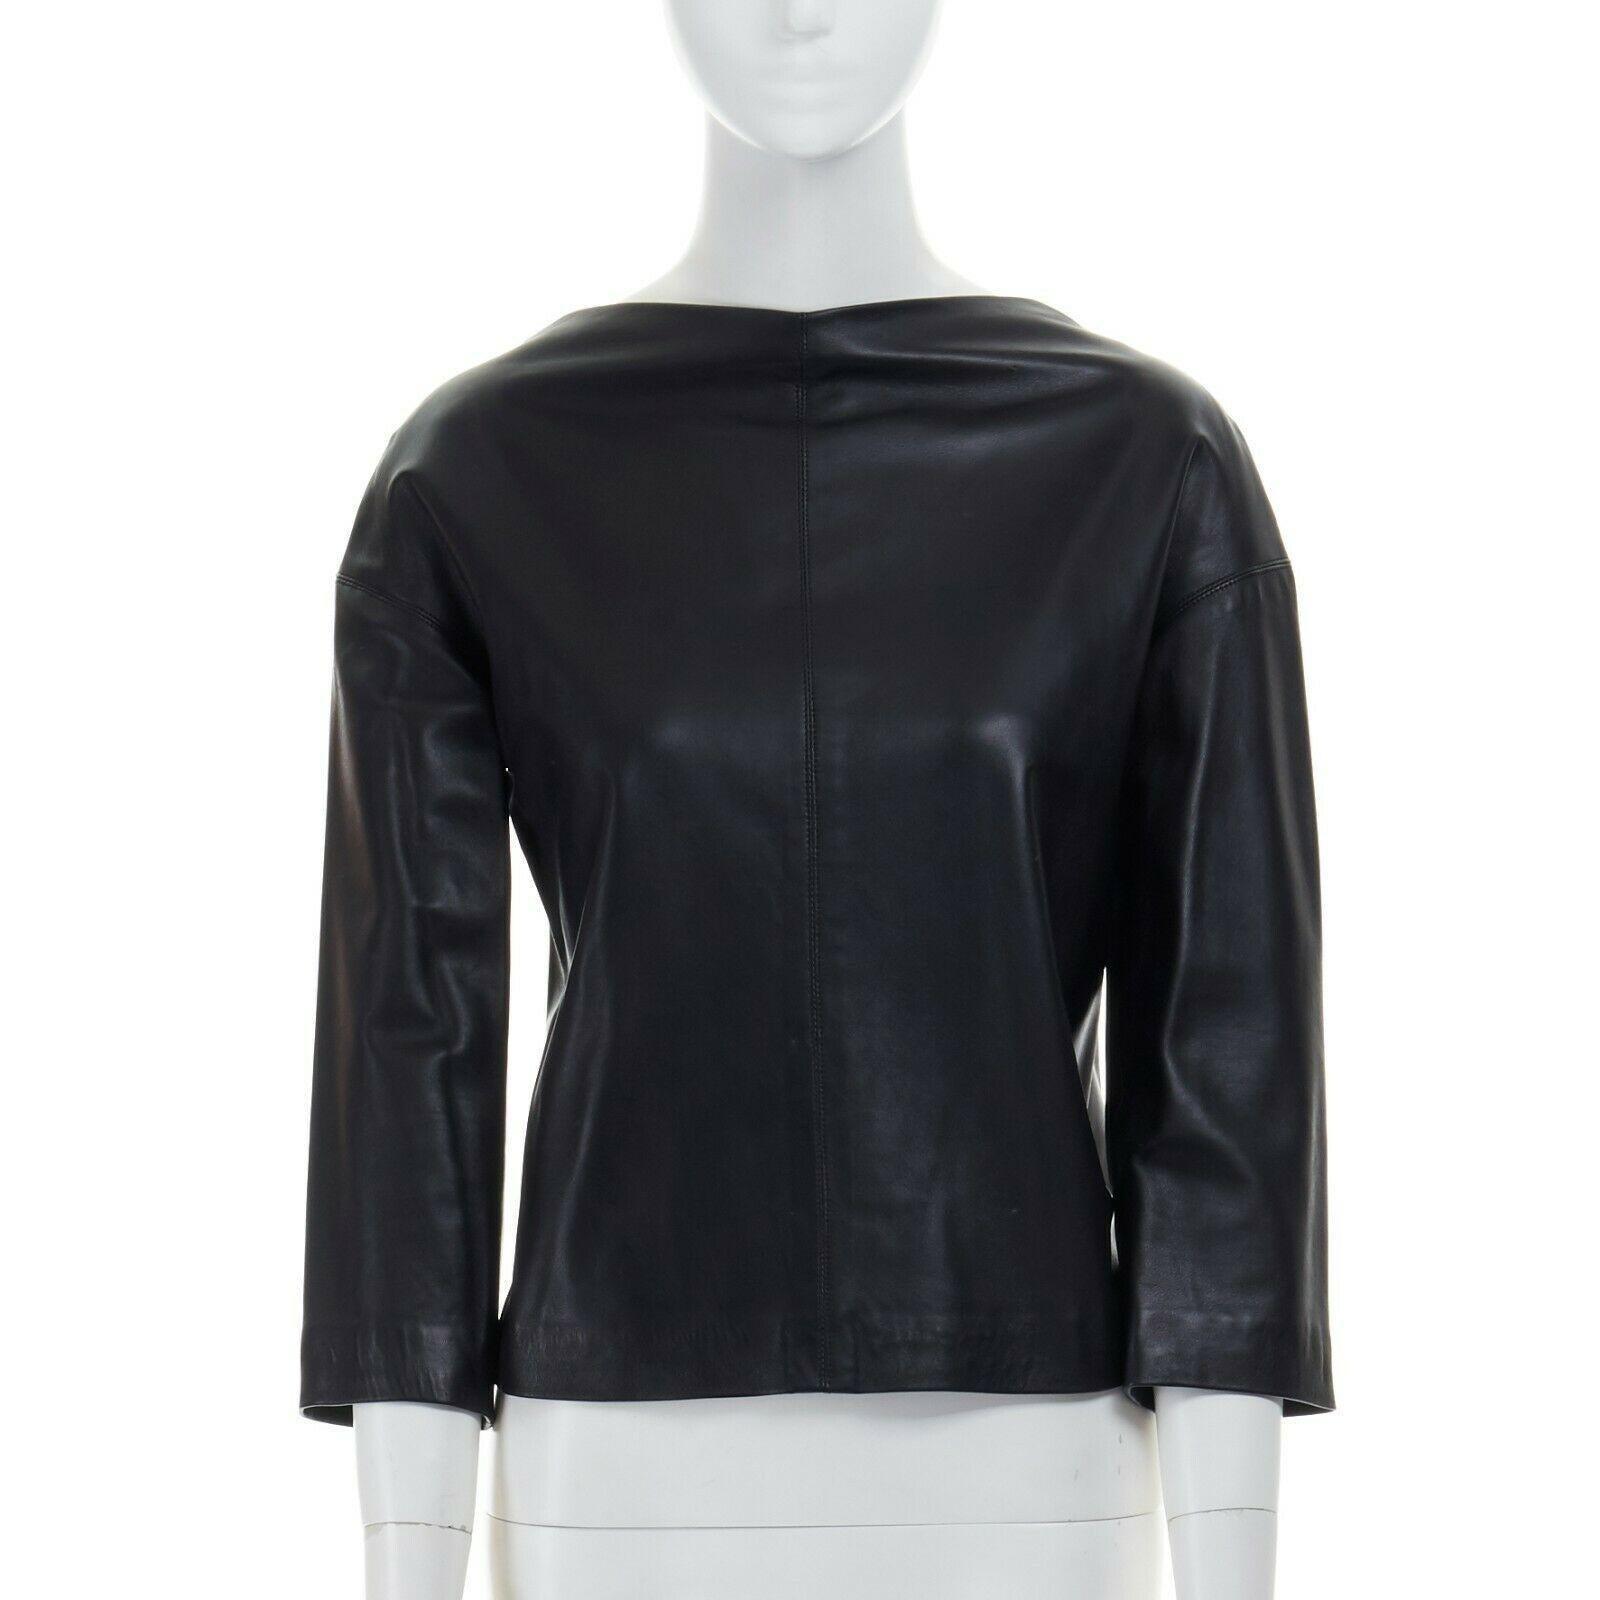 Black DONNA KARAN 100% lambskin leather wide angular neckline 3/4 sleeves top US4 S